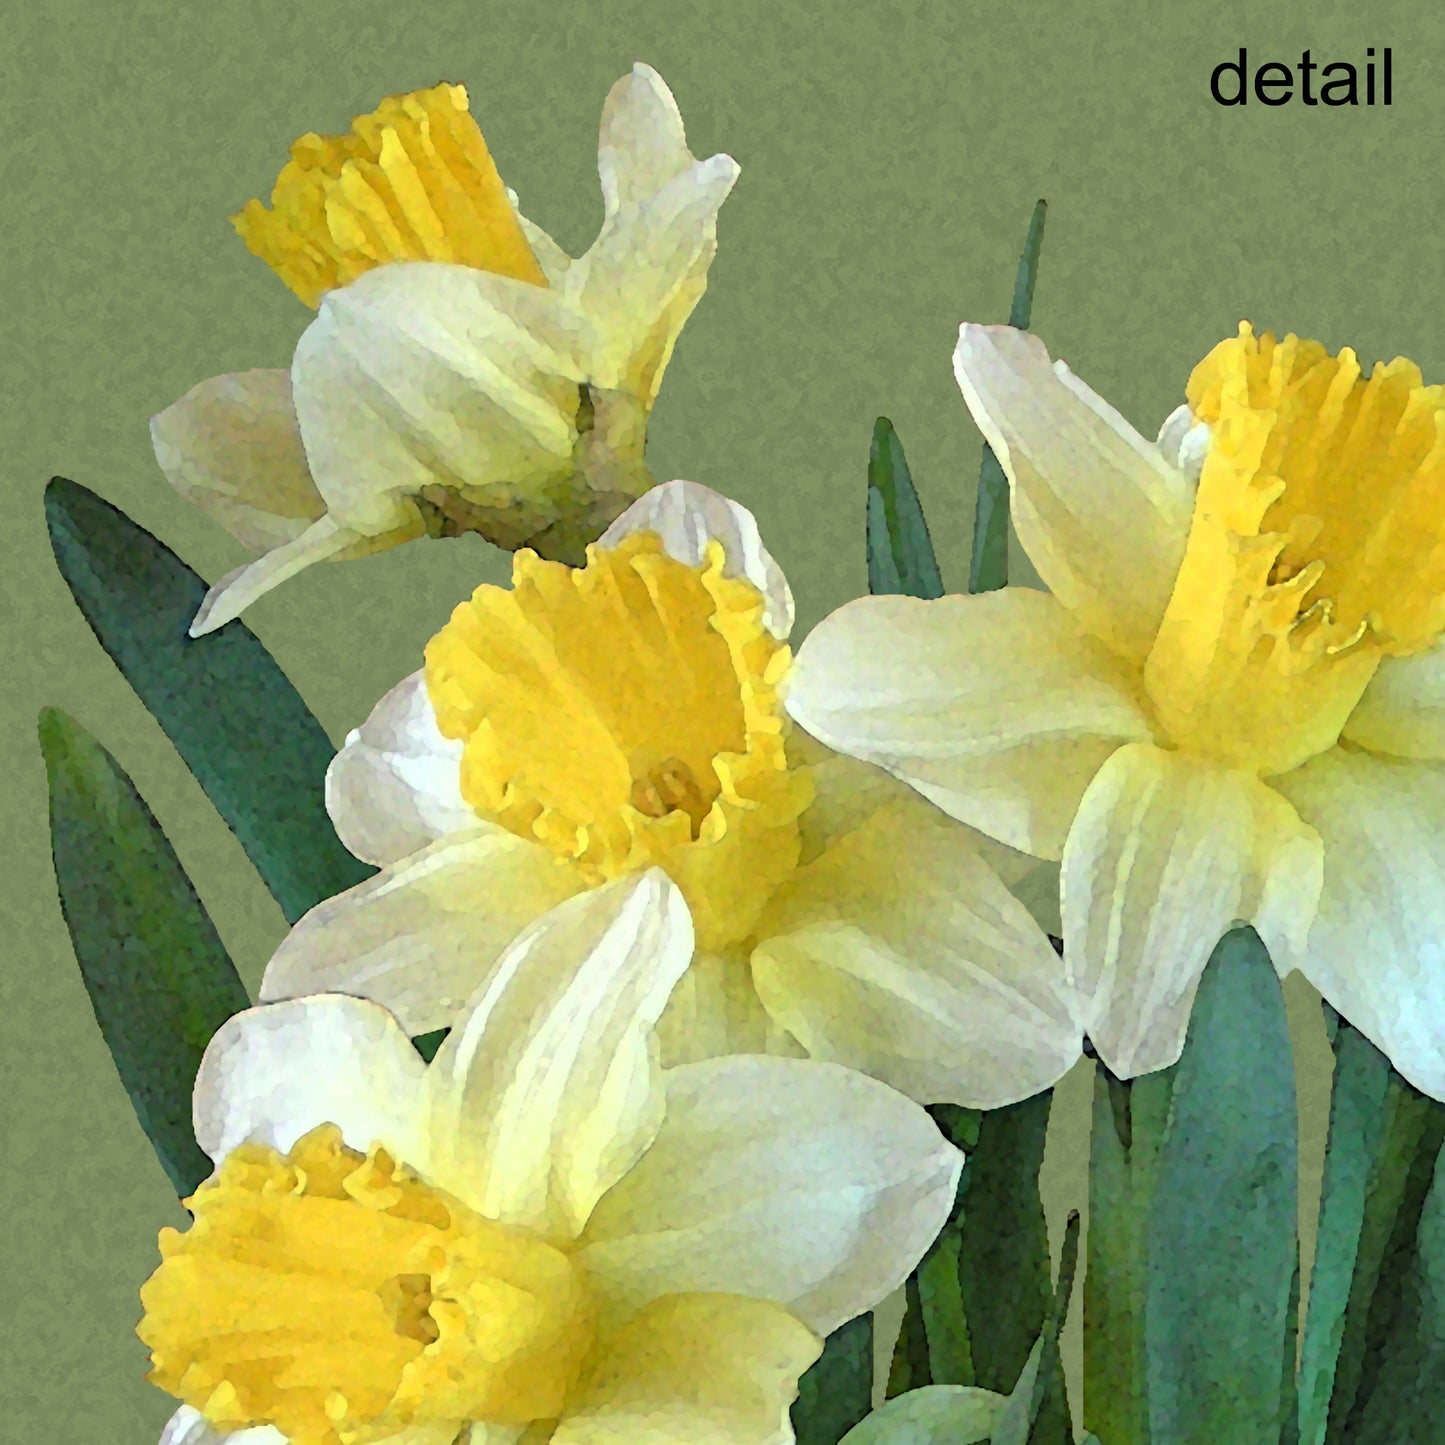 Sunny Daffodils Fine Art Print, Unframed